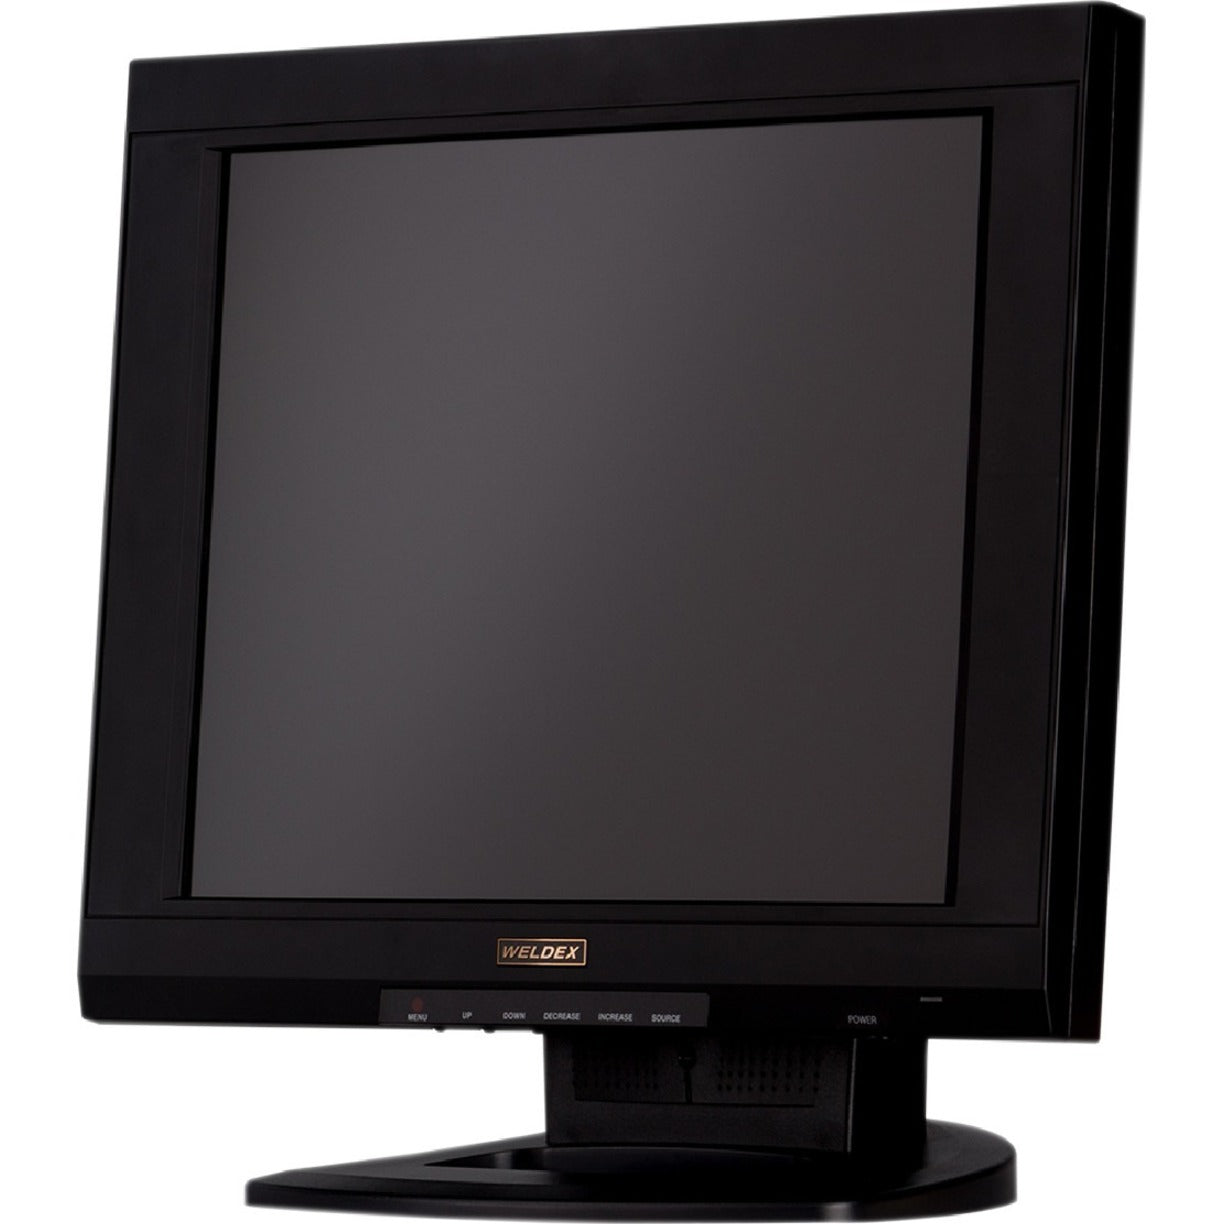 Weldex WDL-1700M Color 17" TFT LCD Flat Screen Monitor, SXGA, VGA and HDMI Inputs